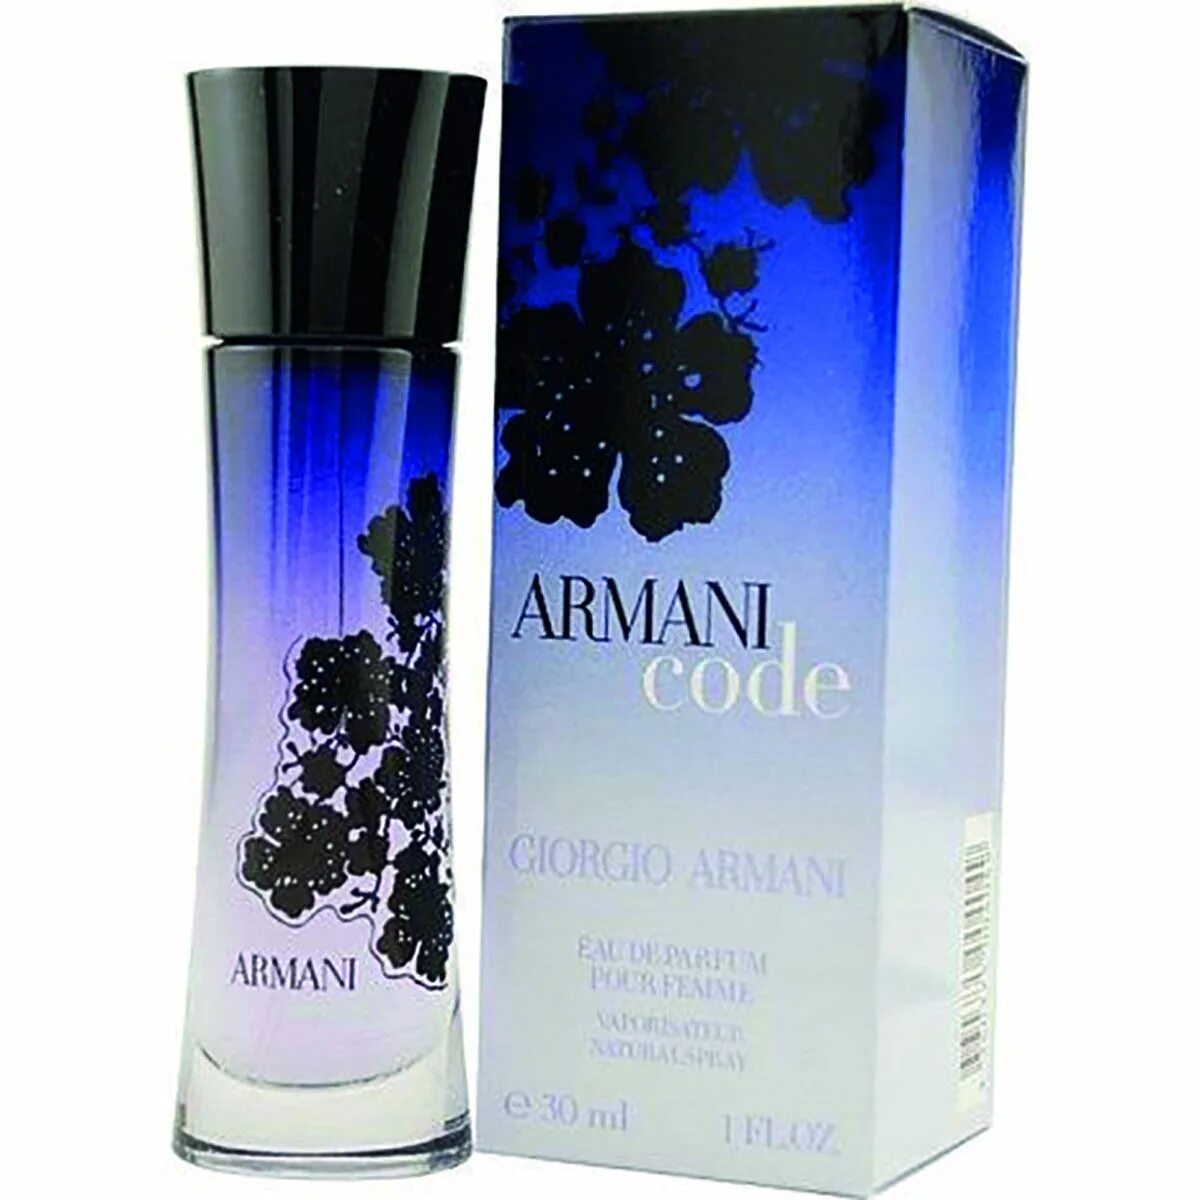 Armani code жен EDP 75ml. Armani code Eau de Parfum Giorgio Armani. Armani code for women Giorgio Armani для женщин. Armani code женский 30 мл.